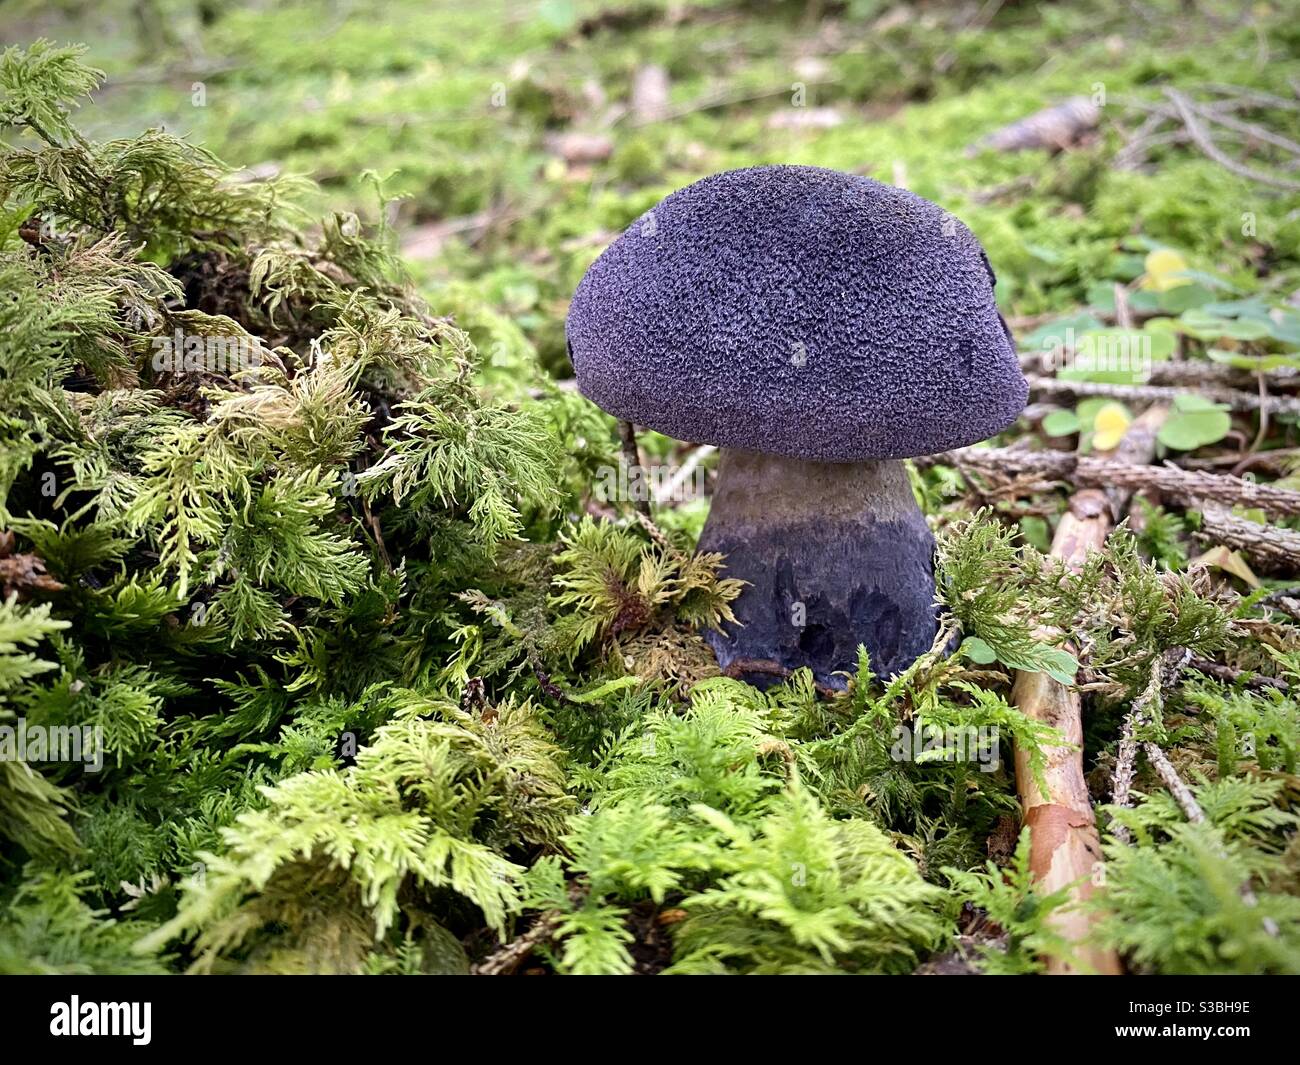 Violet webcap mushroom, Cortinarius violaceus, amongst moss on the forest floor Stock Photo